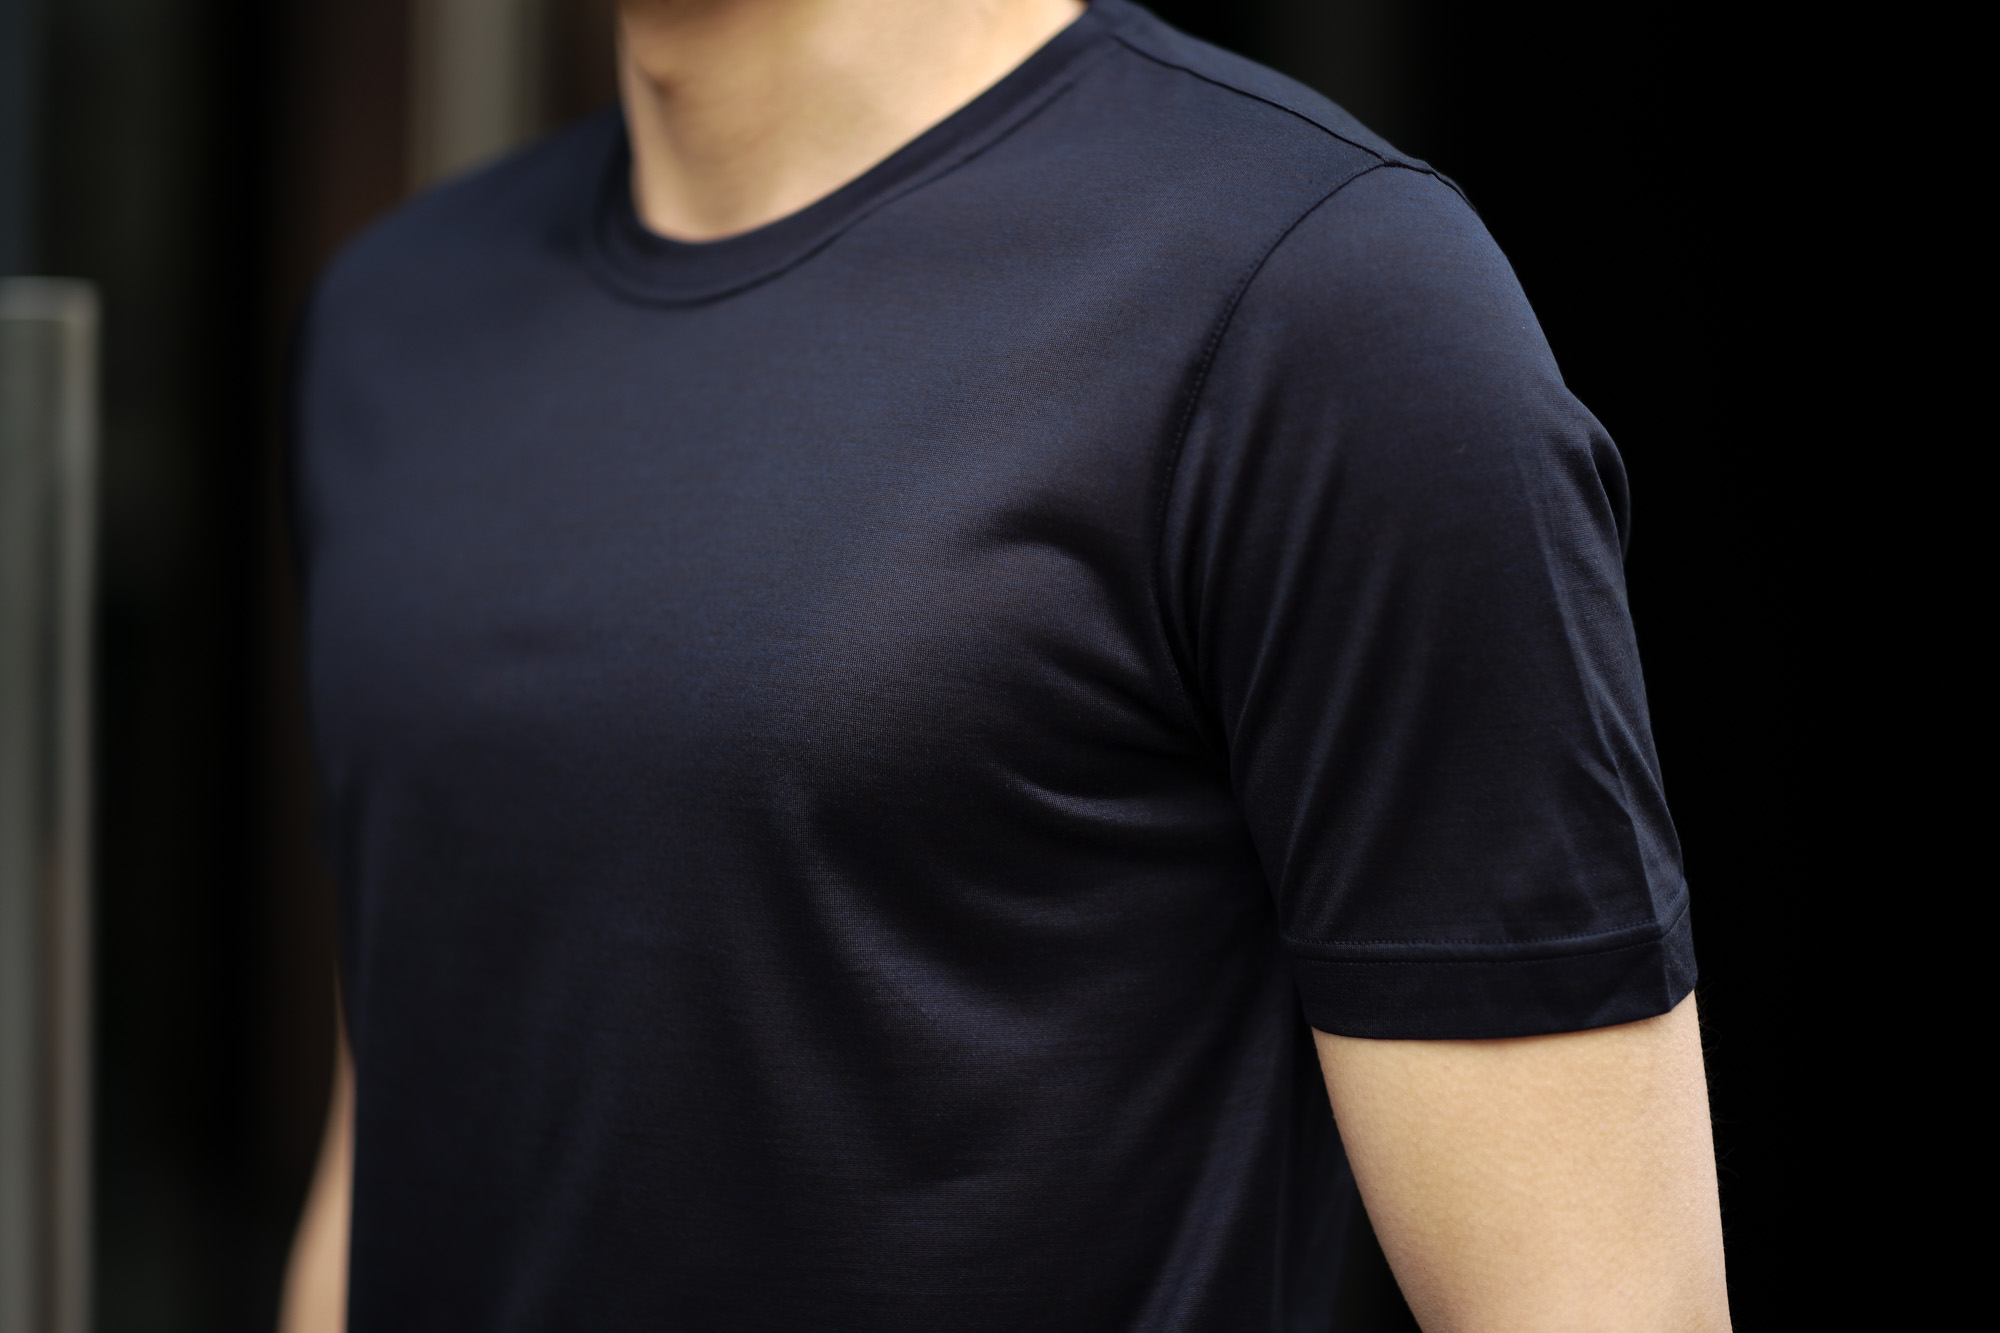 Gran Sasso (グランサッソ) Silk T-shirt (シルク Tシャツ) SETA (シルク 100%) ショートスリーブ シルク Tシャツ NAVY (ネイビー・308) made in italy (イタリア製) 2020 春夏新作   愛知 名古屋 altoediritto アルトエデリット